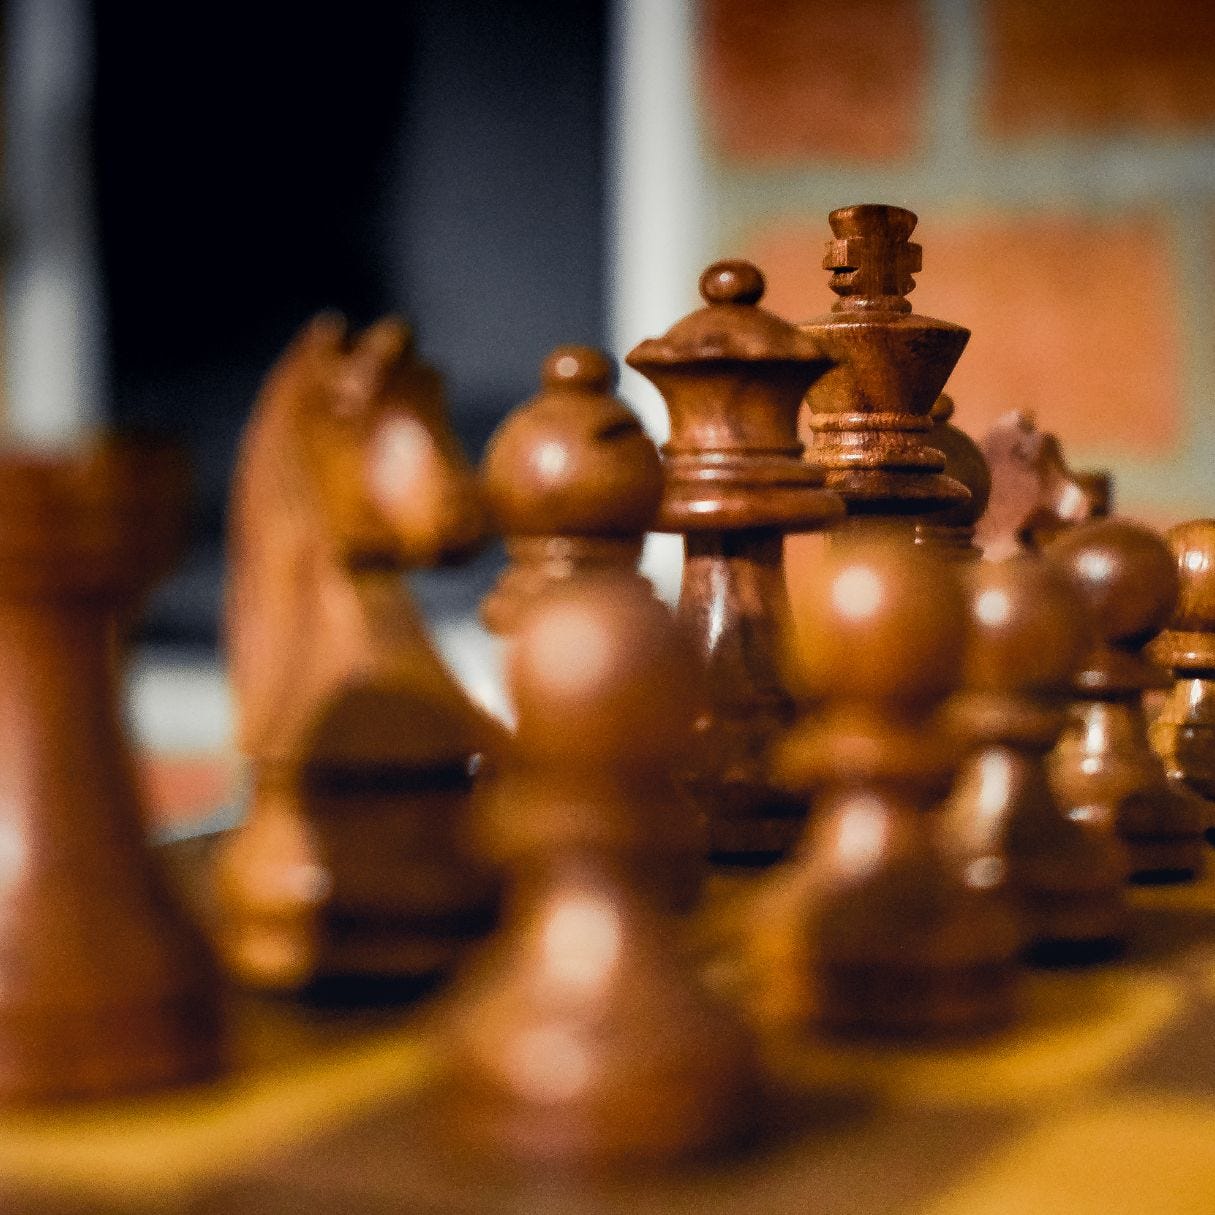 Luxury Chess & Luxury Quantum Chess-boards